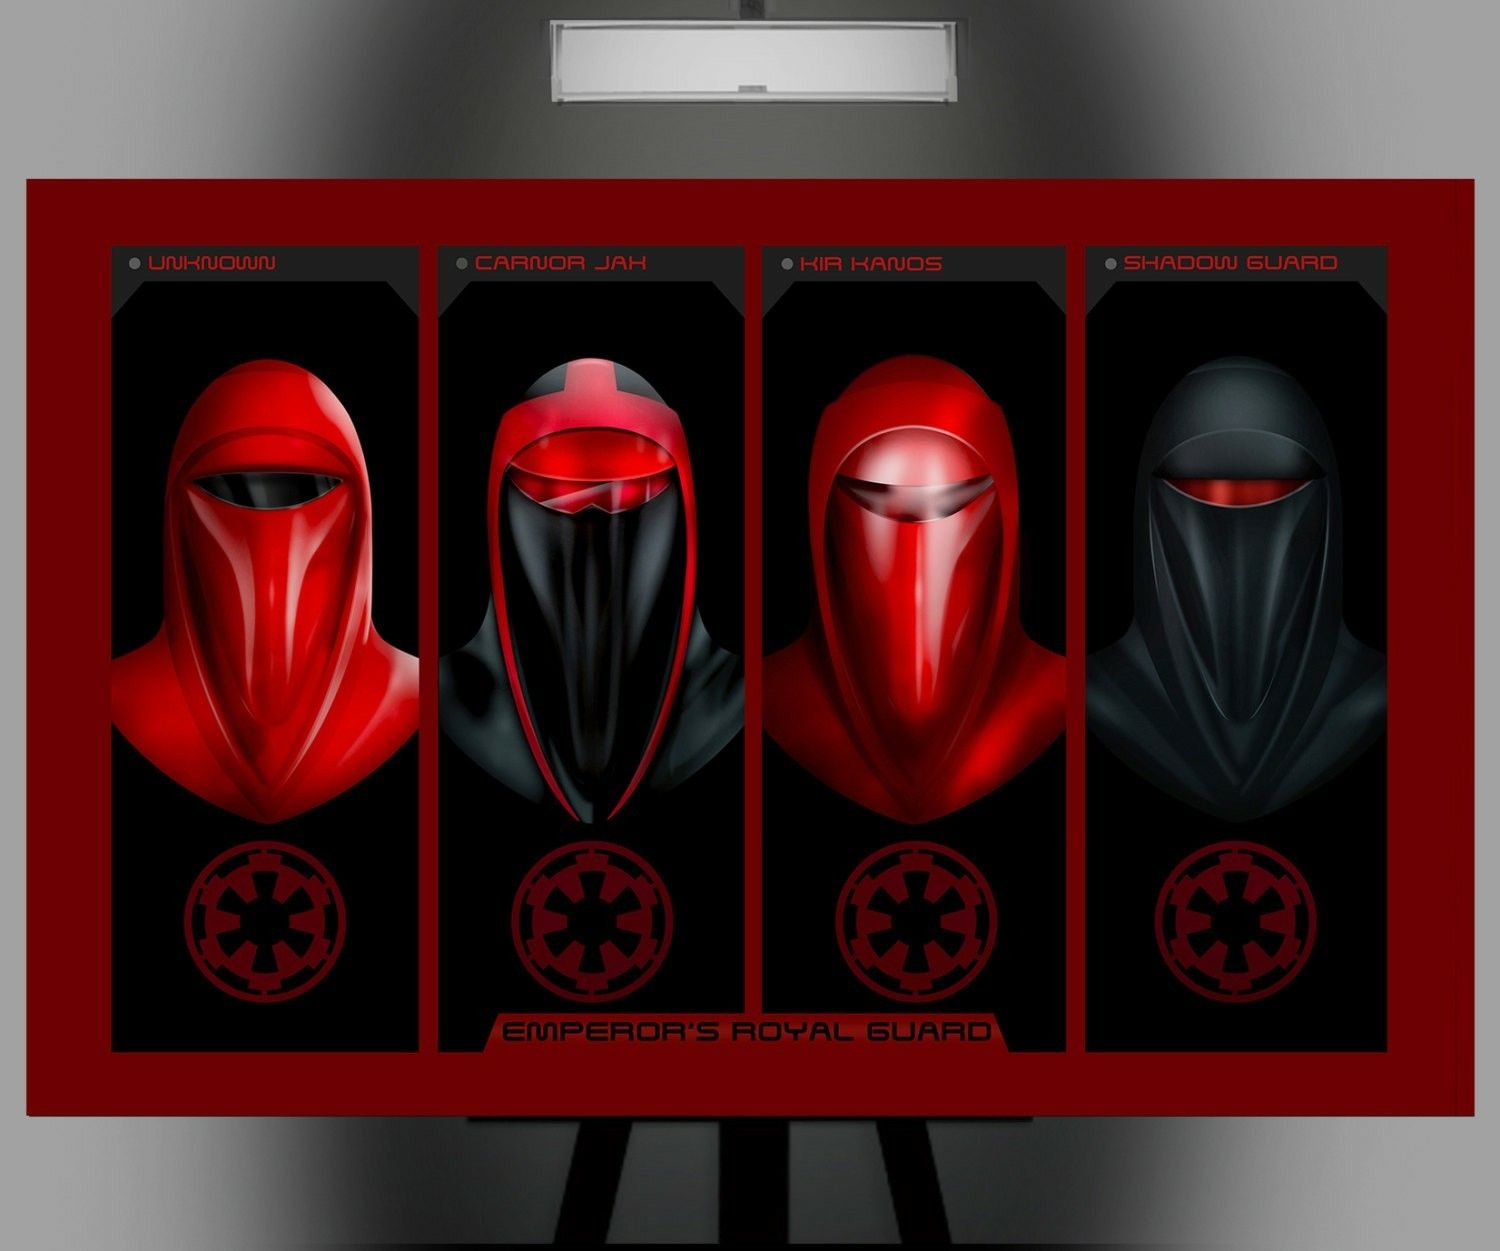 Imperial Guards. Star wars art, Star wars concept art, Star wars image